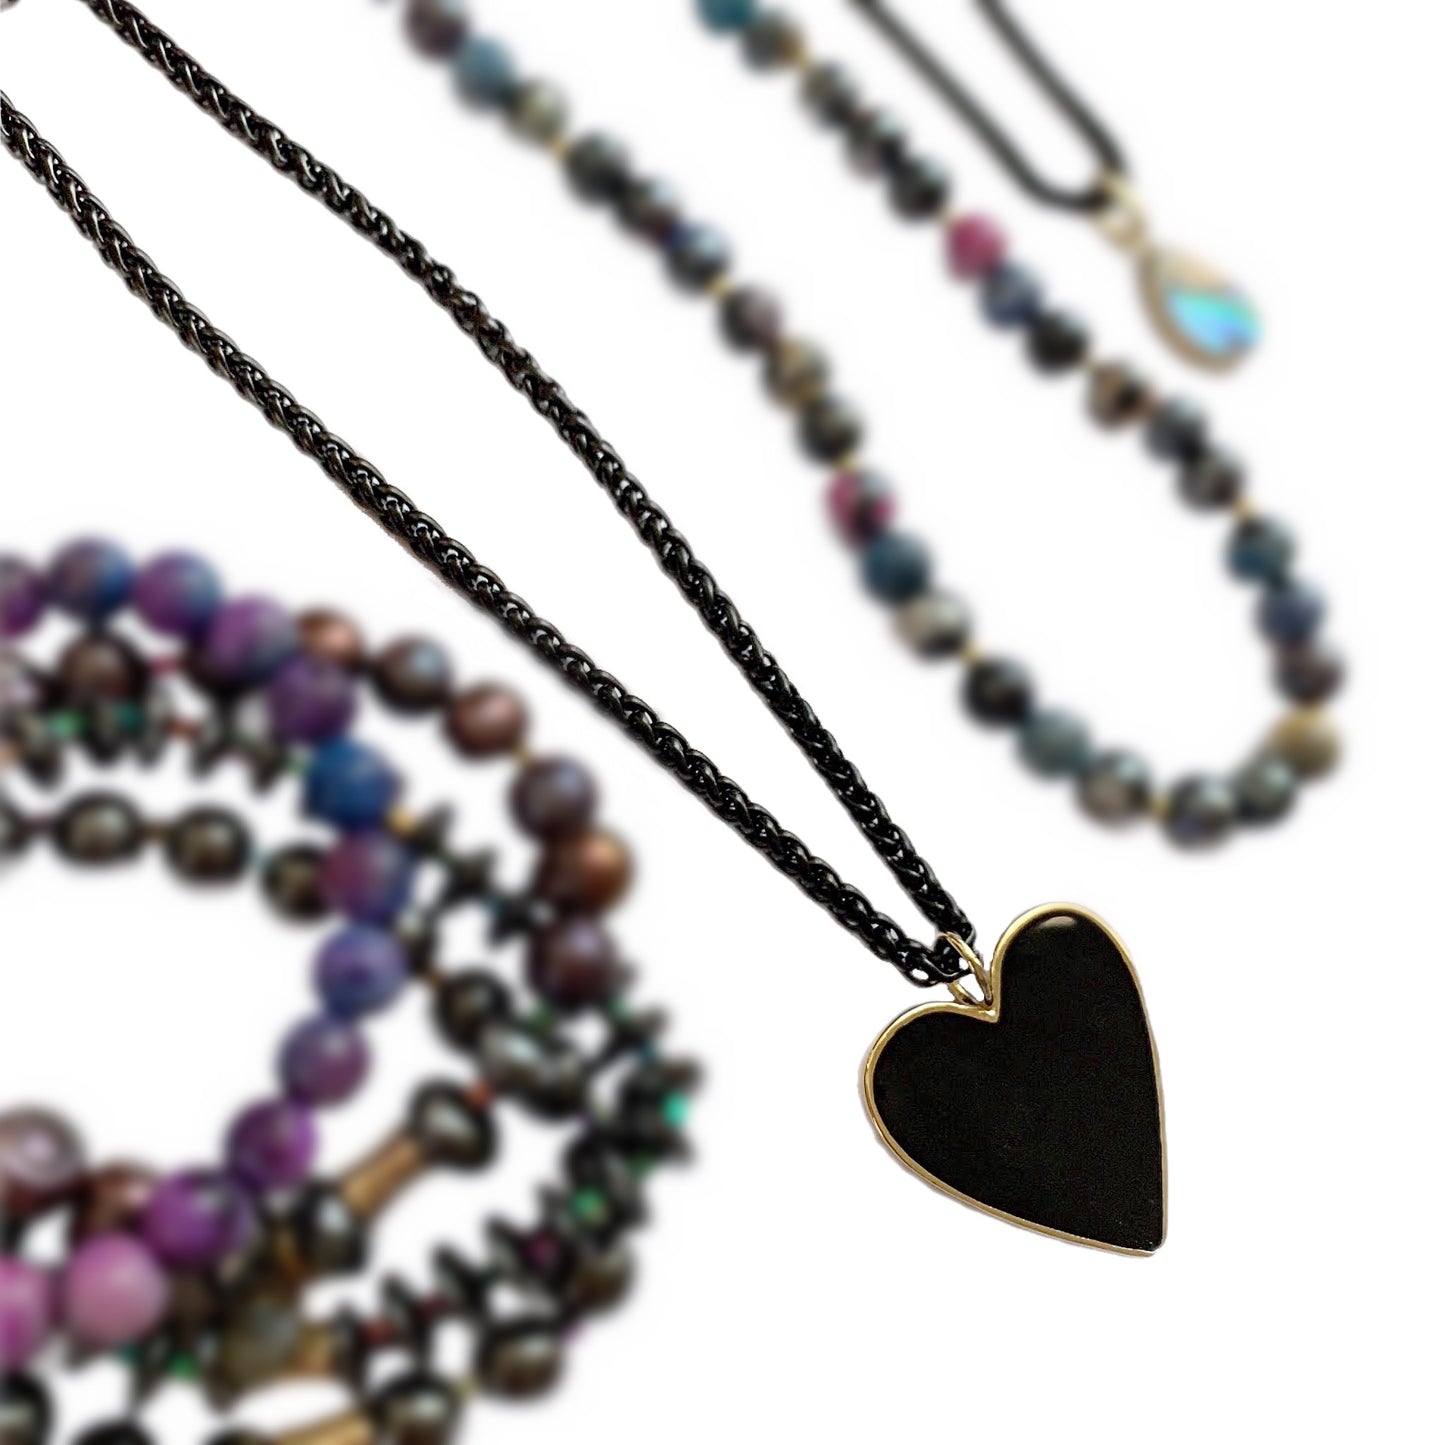 Queen of Hearts Black Pendant Necklace